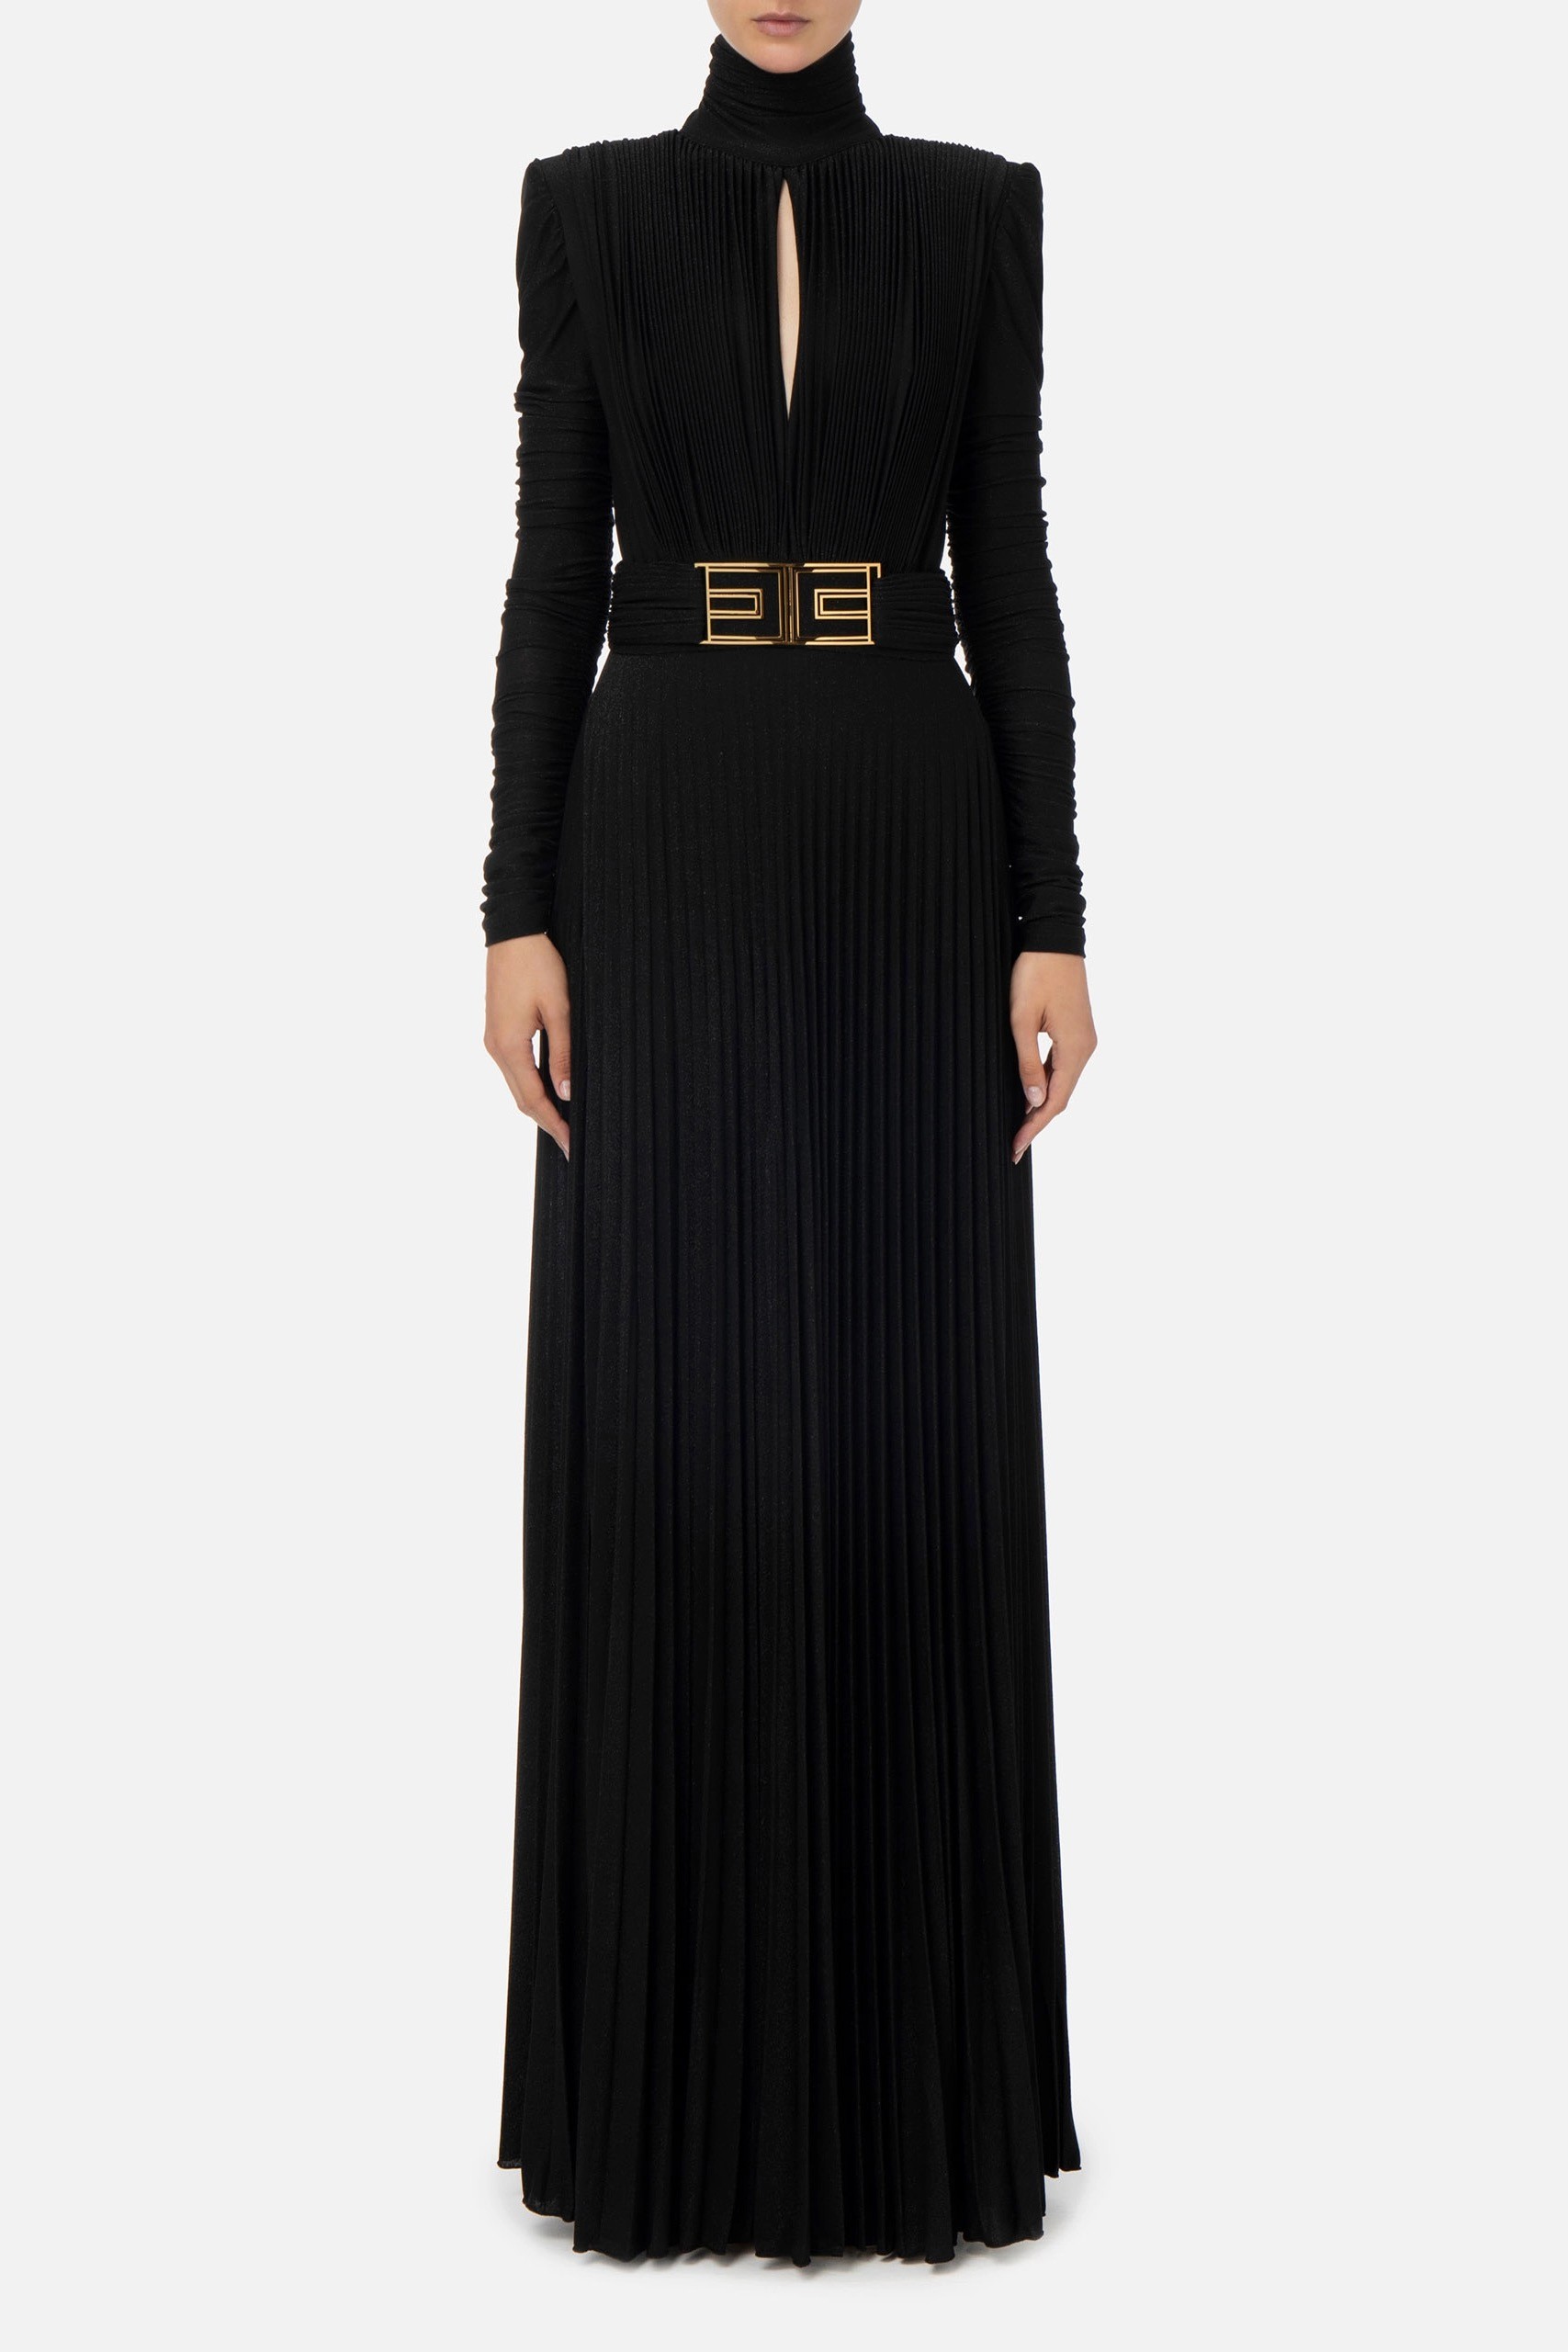 Elisabetta Franchi - Red Carpet dress in pleated lurex jersey black 